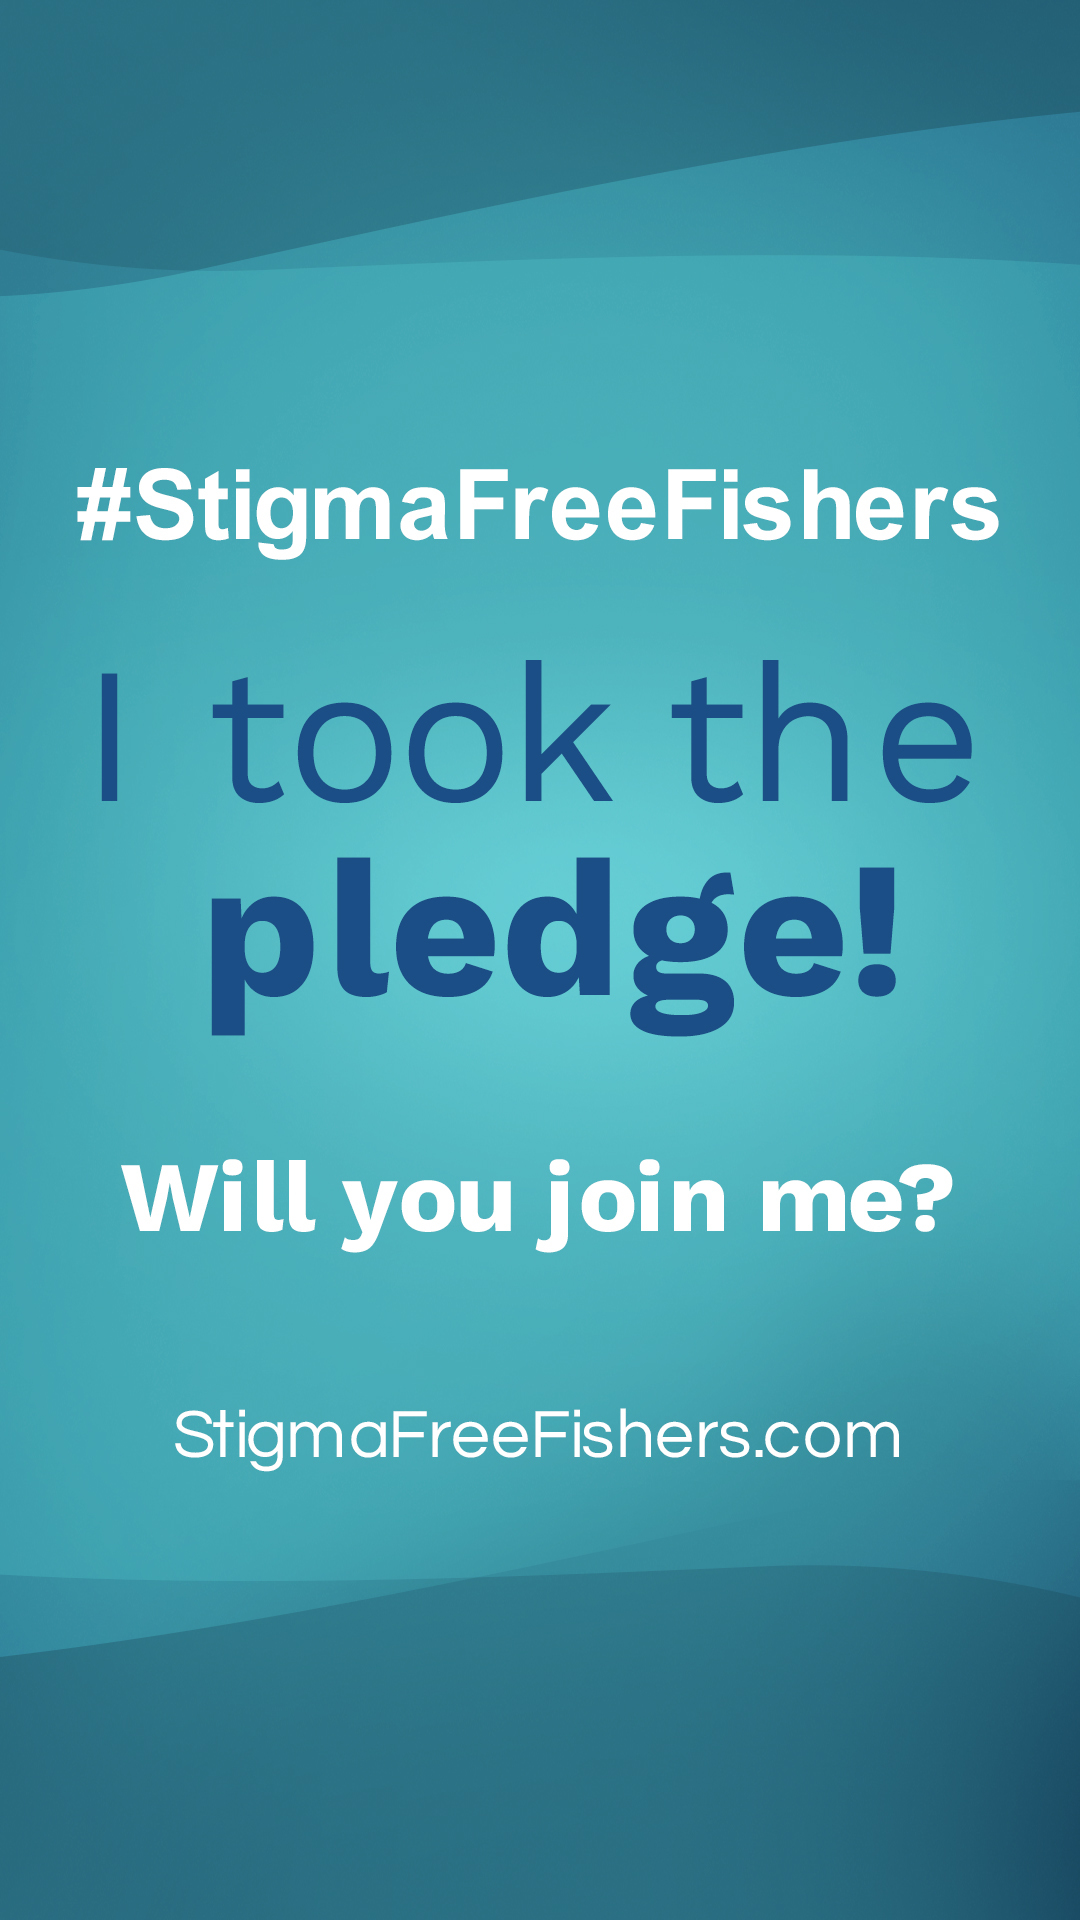 #StigmaFreeFishers I took the pledge! Will you join me? stigmafreefishers.com instagram story